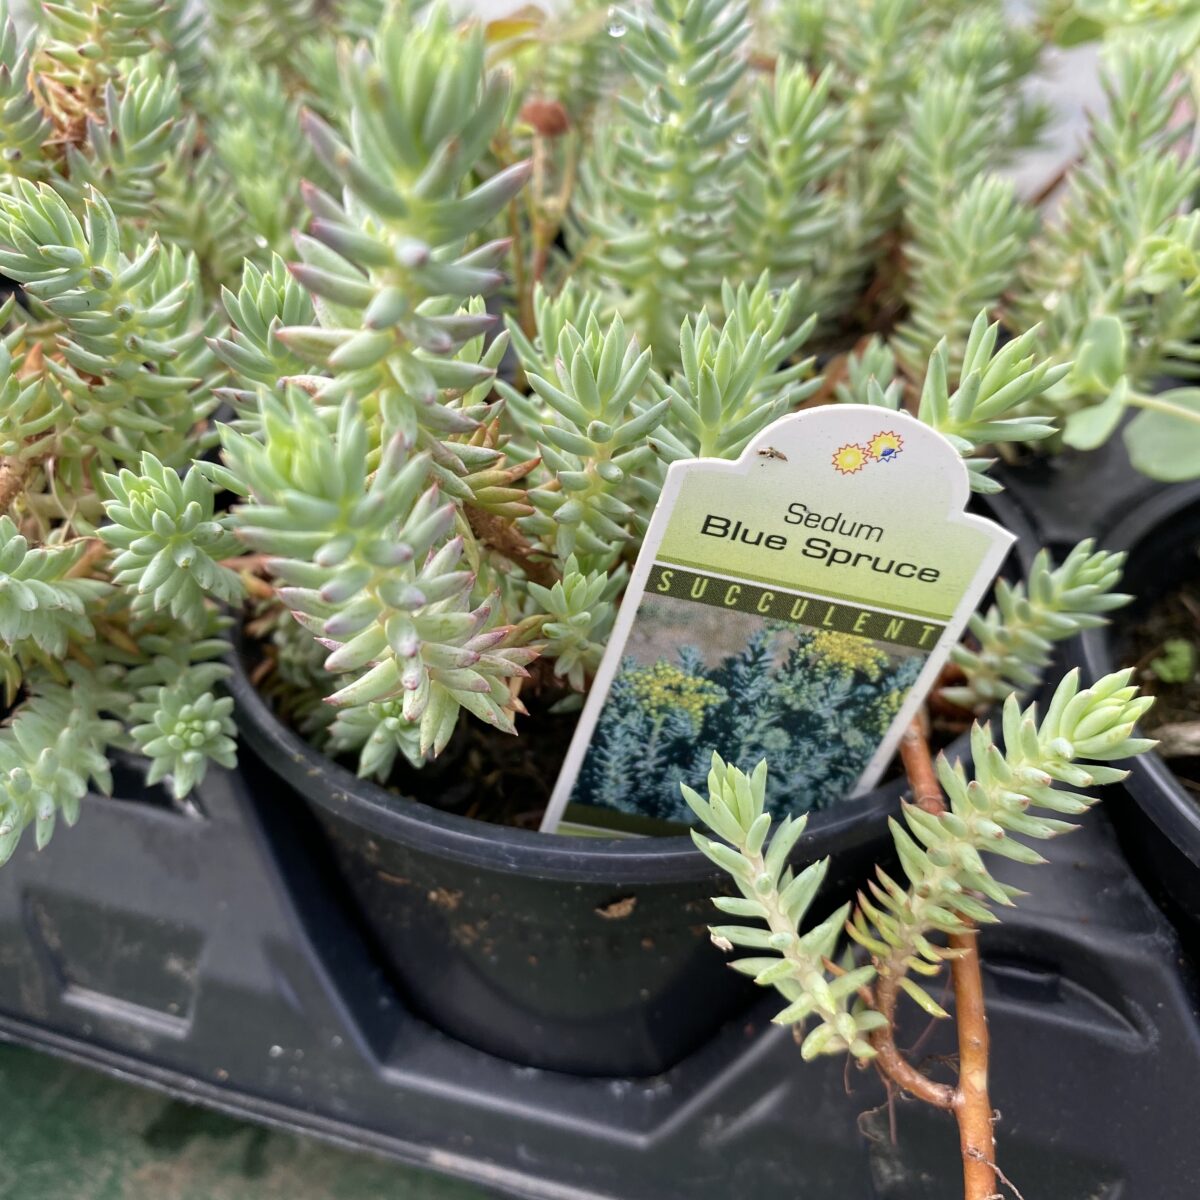 Sedum “Blue Spruce” – Perennials › Anything Grows